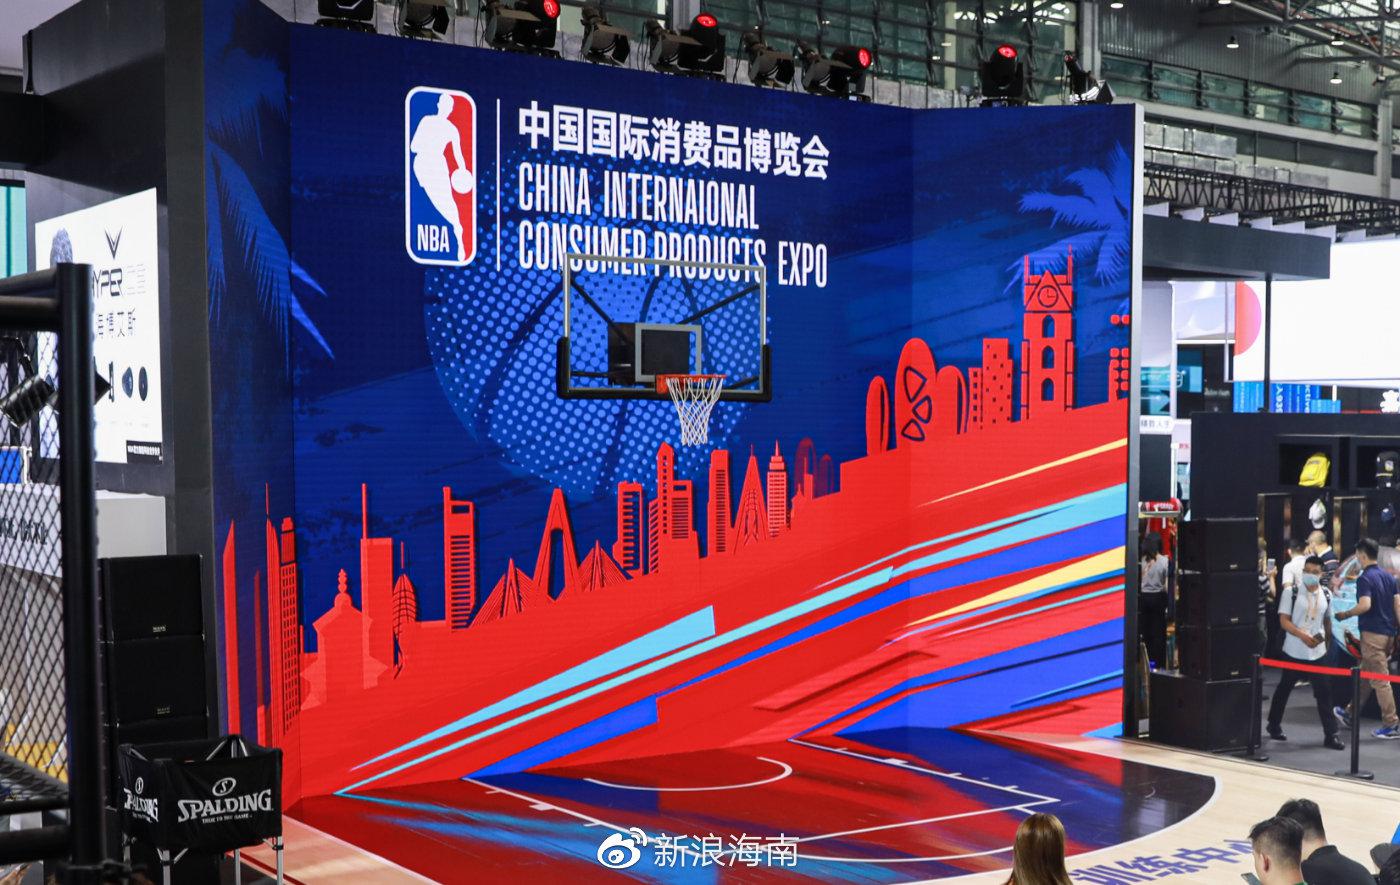  NBA在首届中国国际消费品博览会上亮相